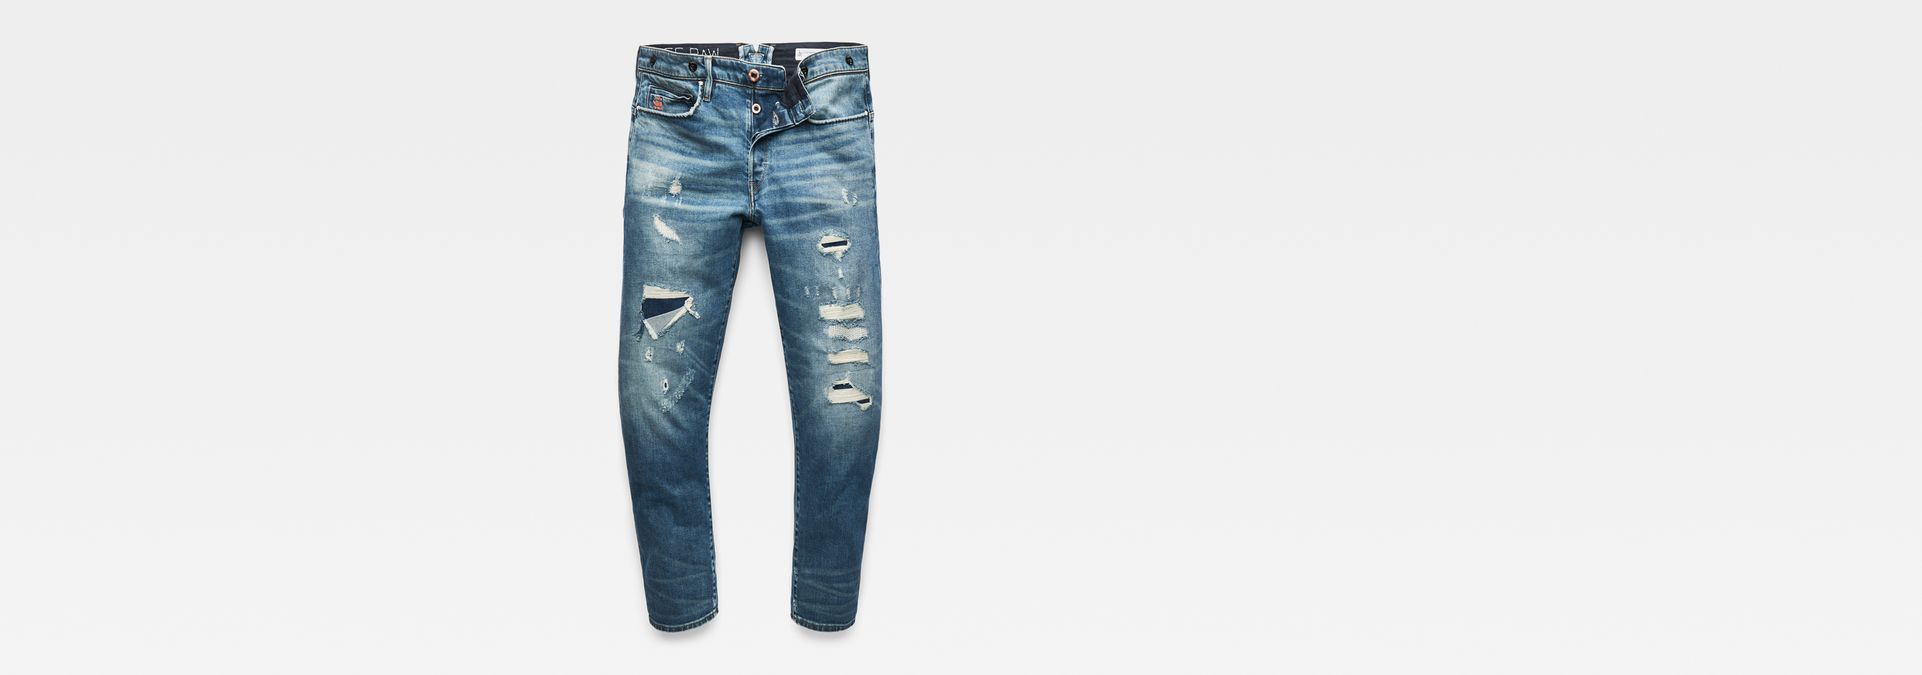 g star type c jeans